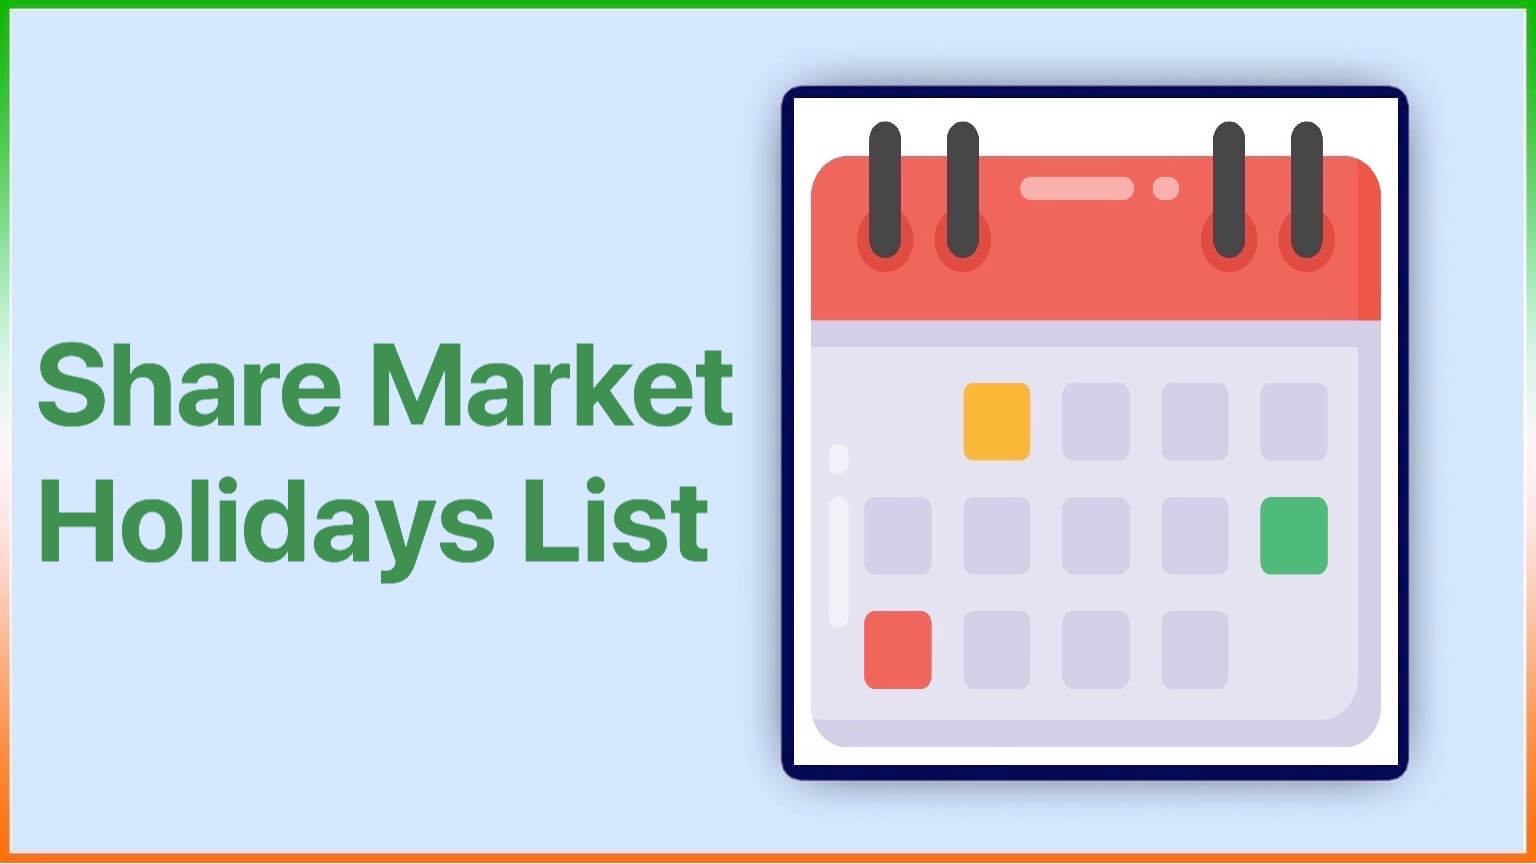 Share Market Holiday List